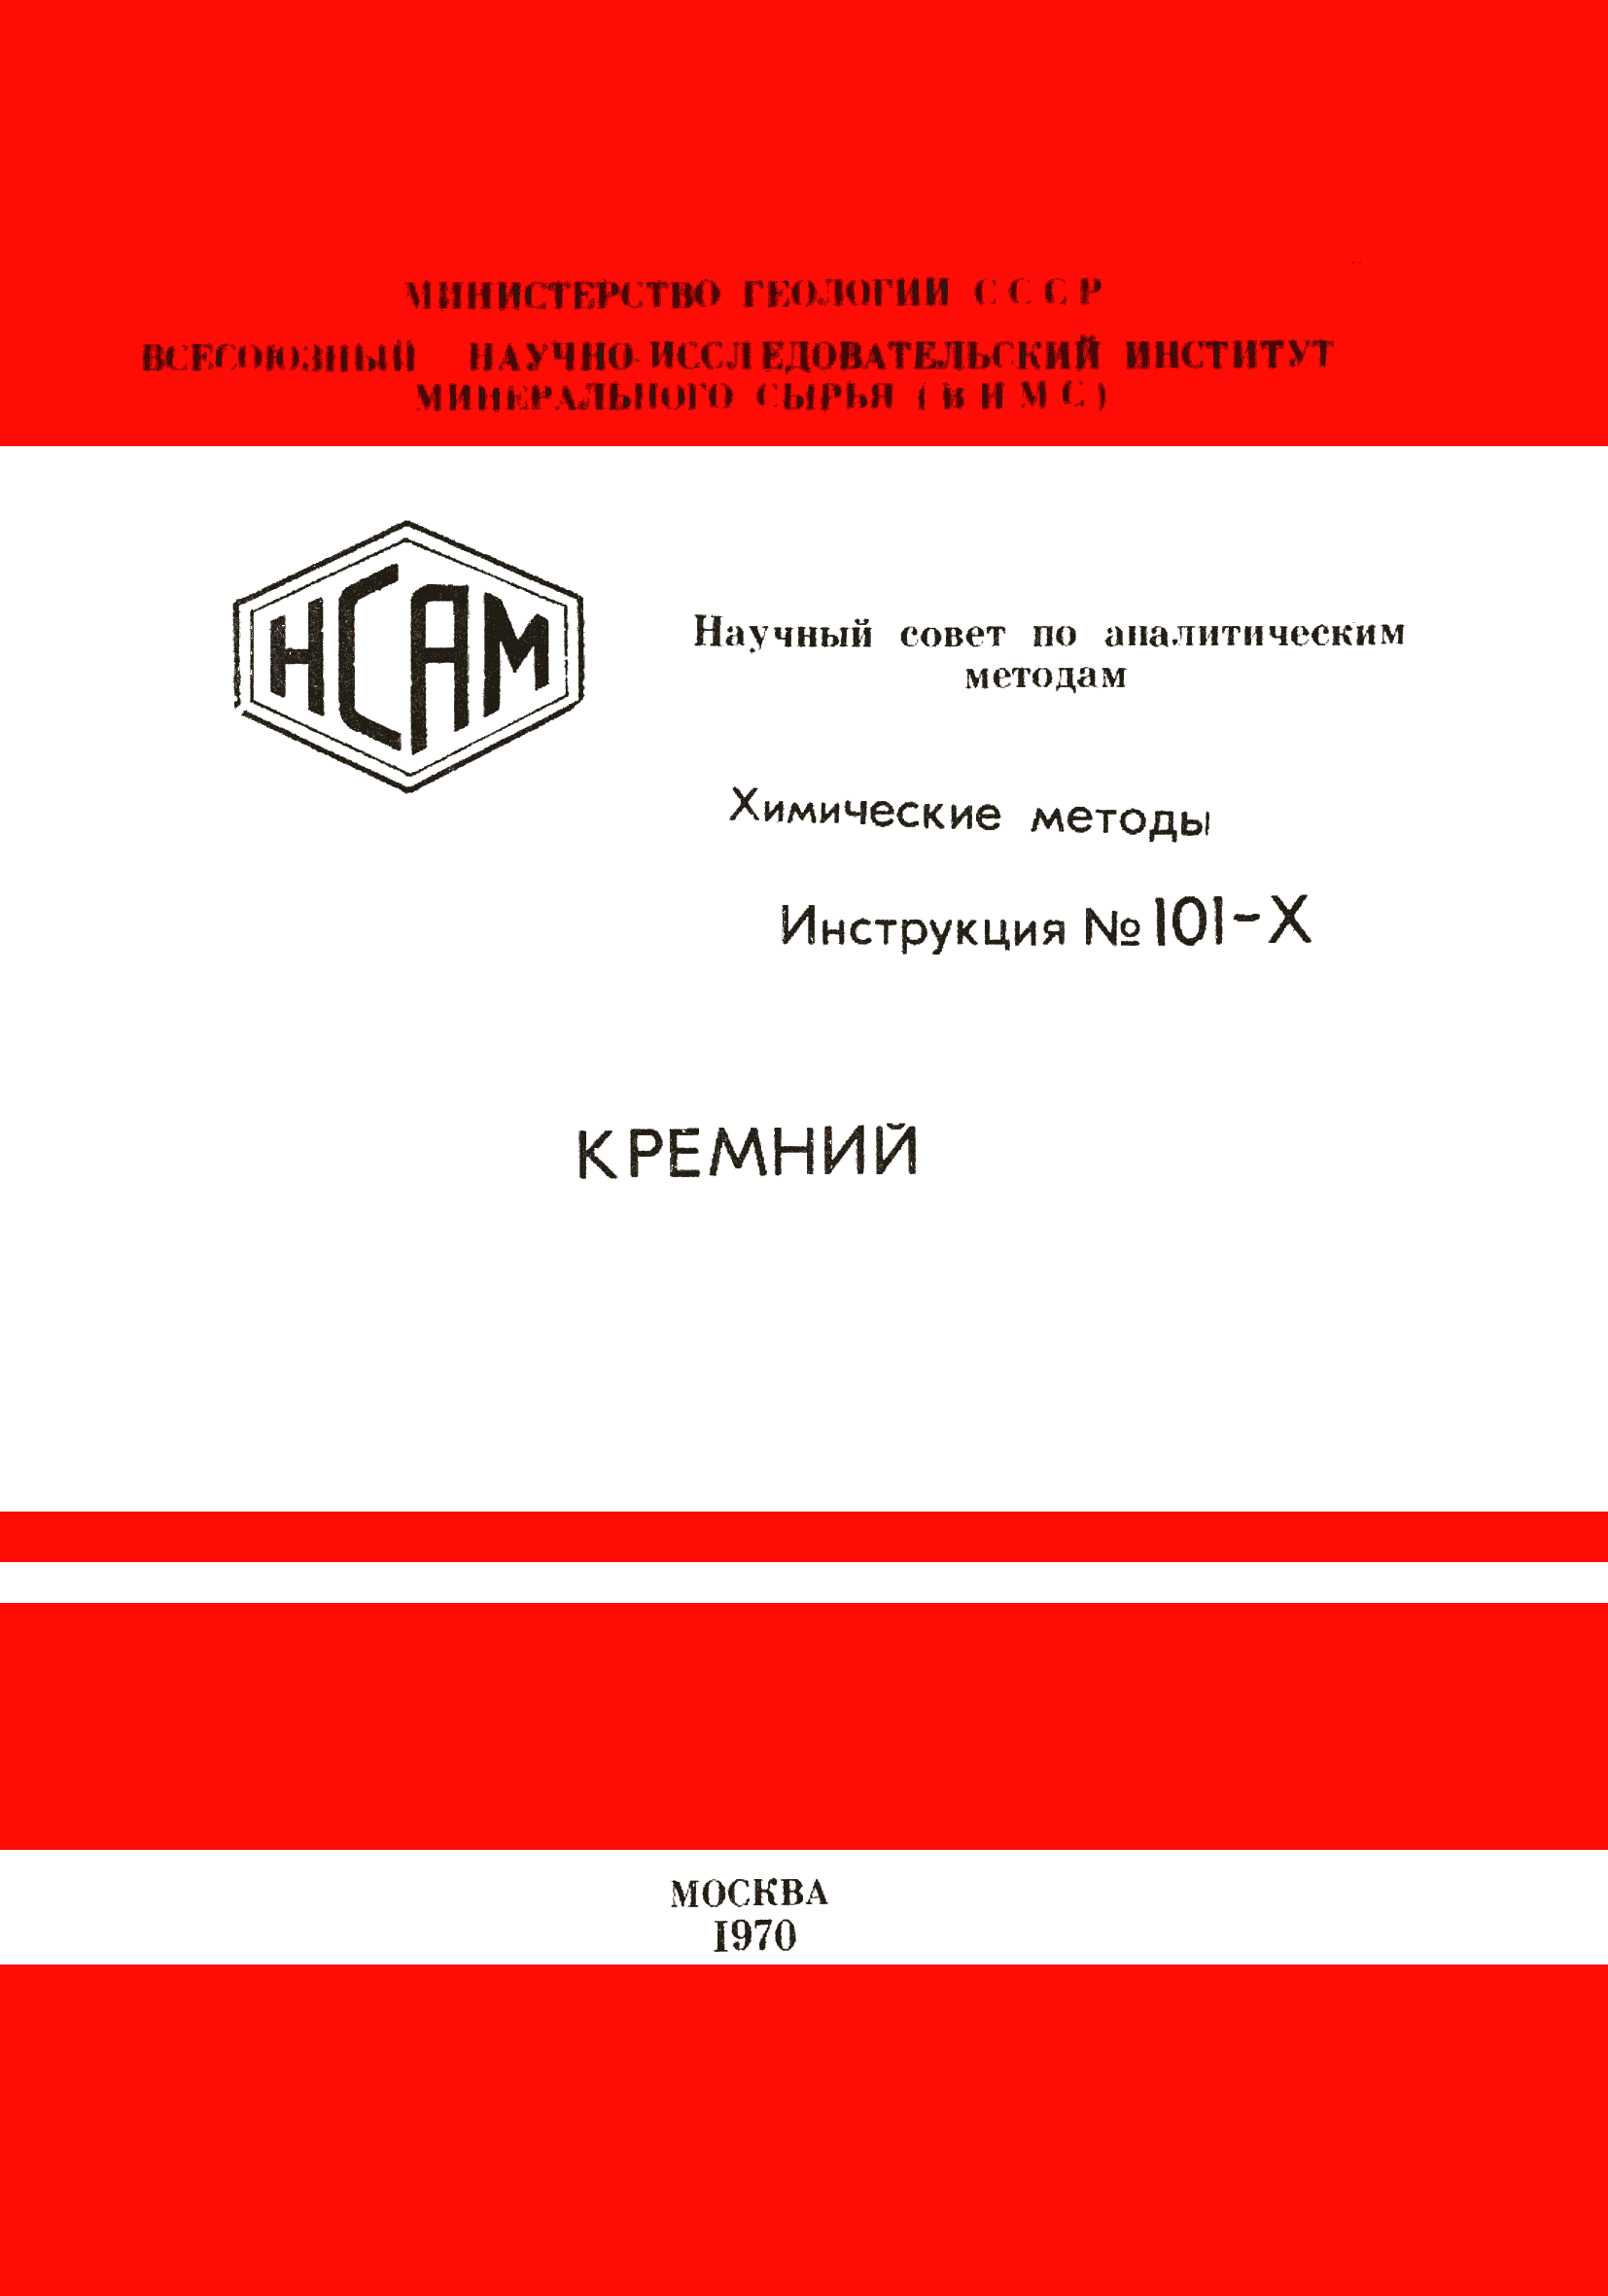 Инструкция НСАМ 101-Х